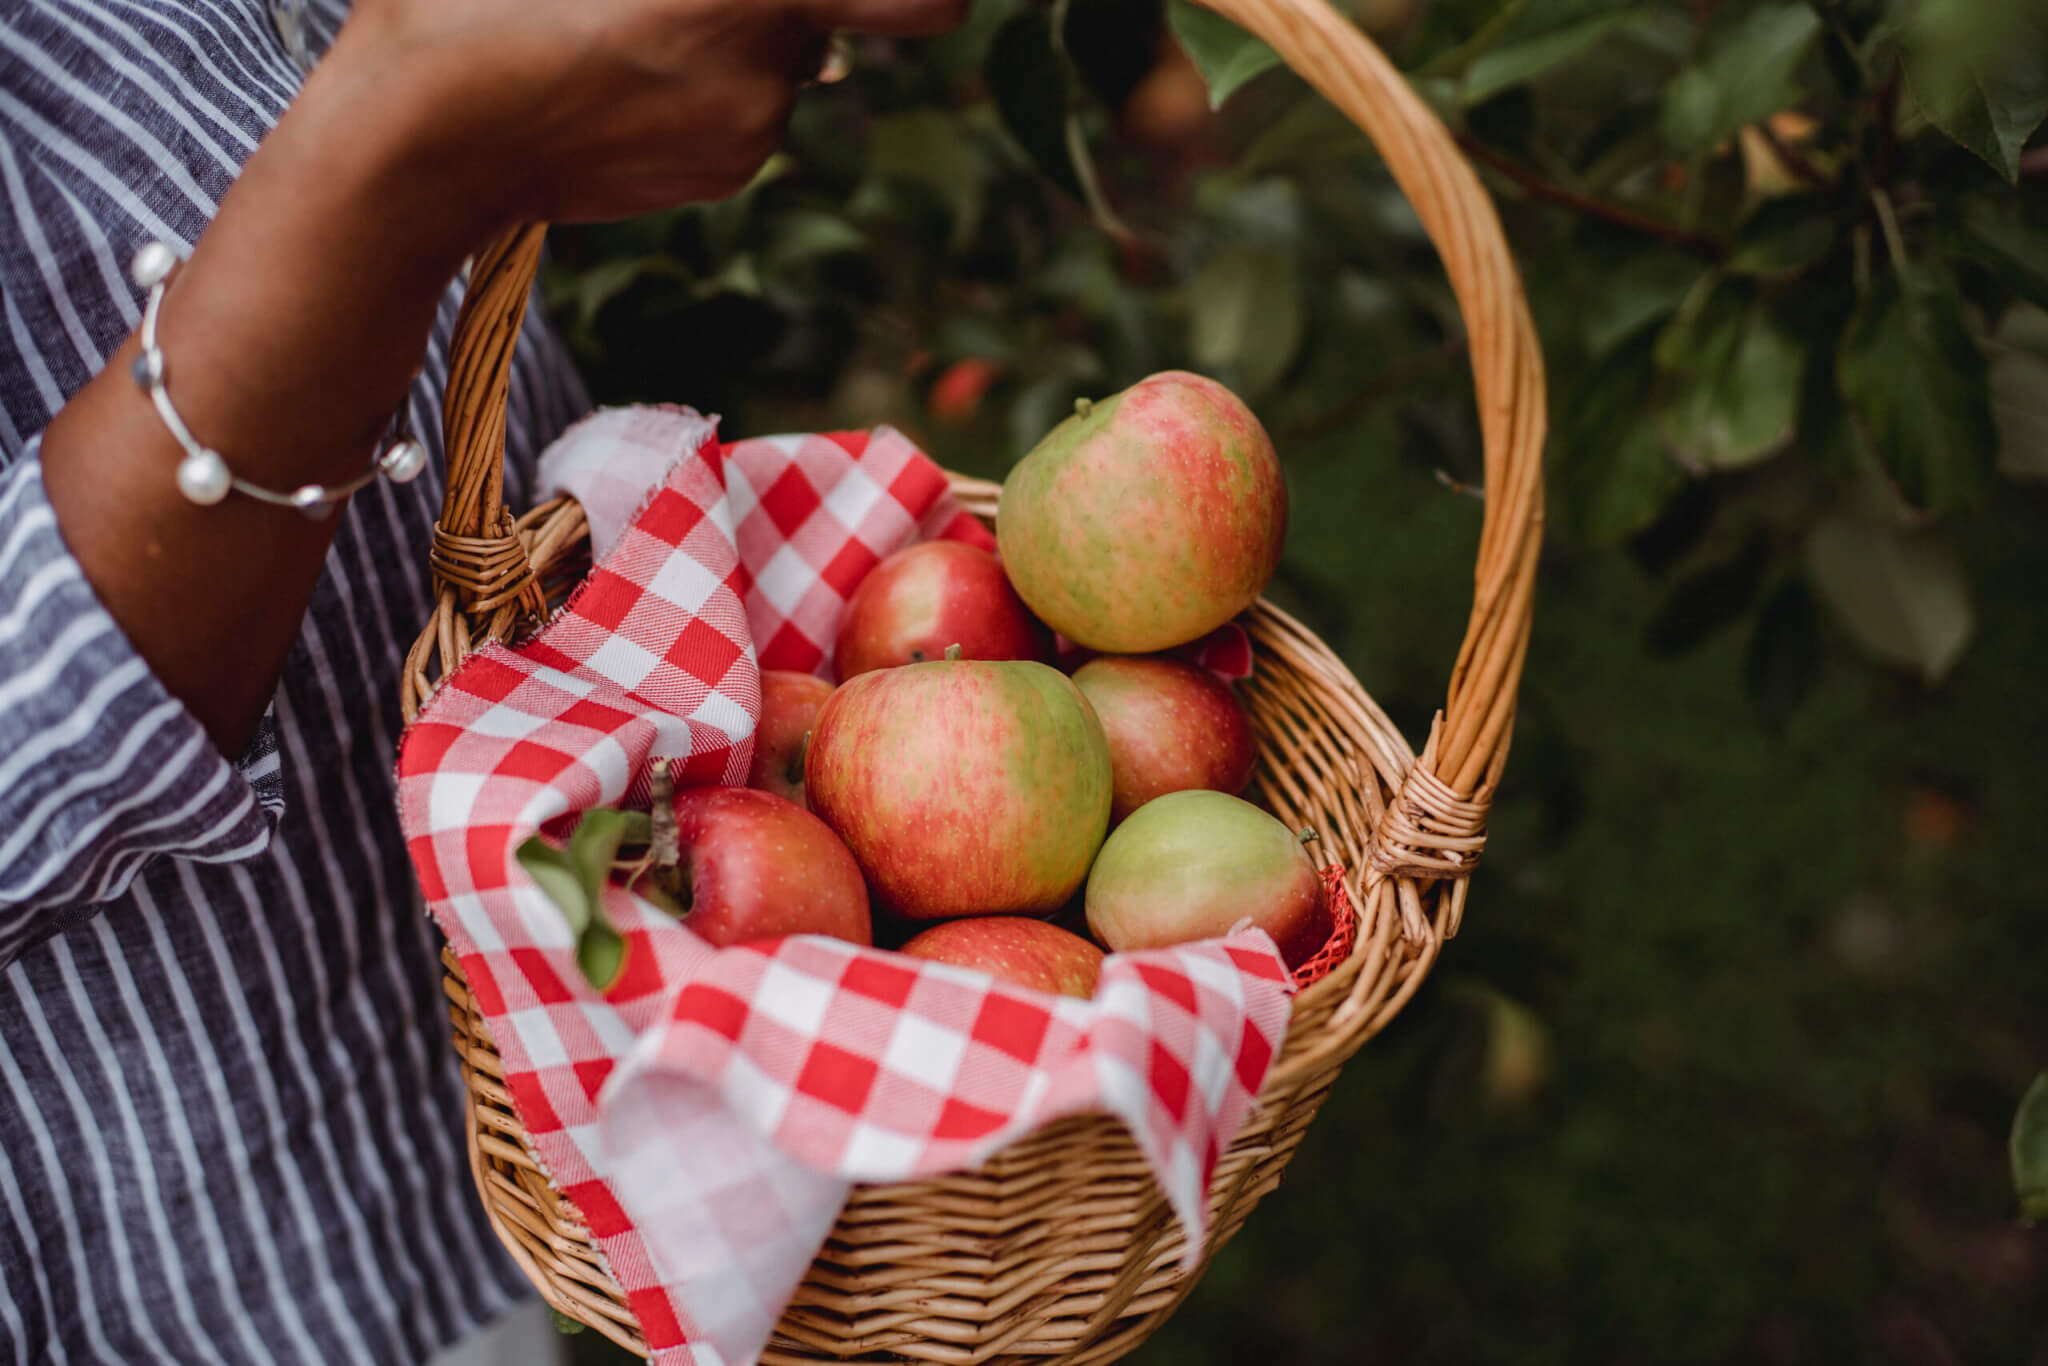 Ethnic woman picking apples in basket